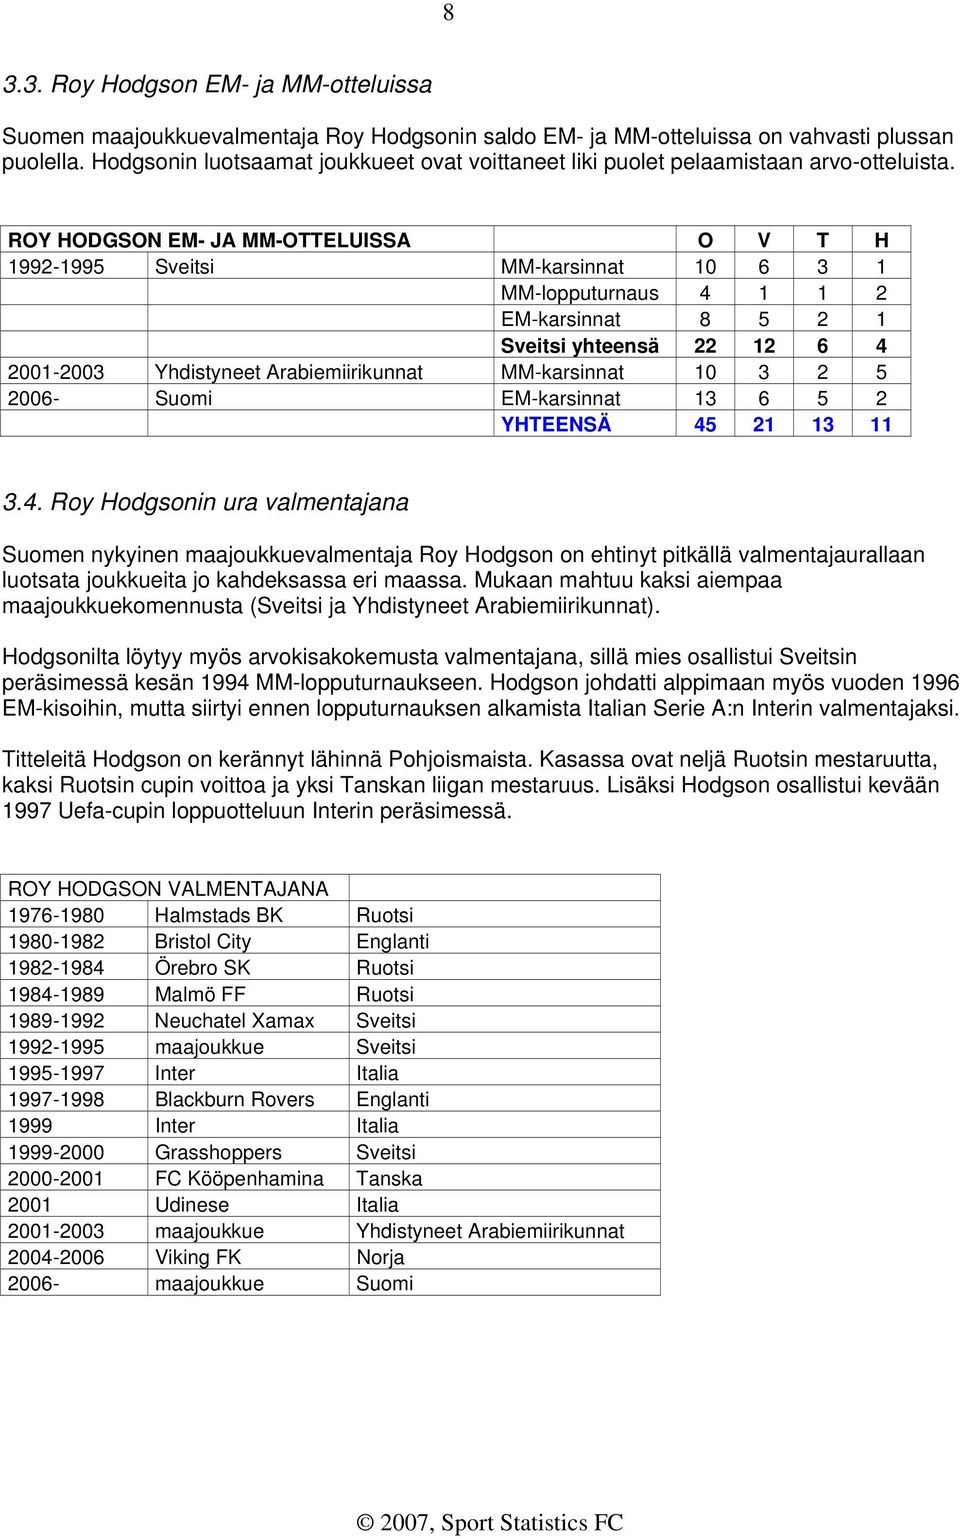 ROY HODGSON EM- JA MM-OTTELUISSA O V T H 1992-1995 Sveitsi MM-karsinnat 10 6 3 1 MM-lopputurnaus 4 1 1 2 EM-karsinnat 8 5 2 1 Sveitsi yhteensä 22 12 6 4 2001-2003 Yhdistyneet Arabiemiirikunnat